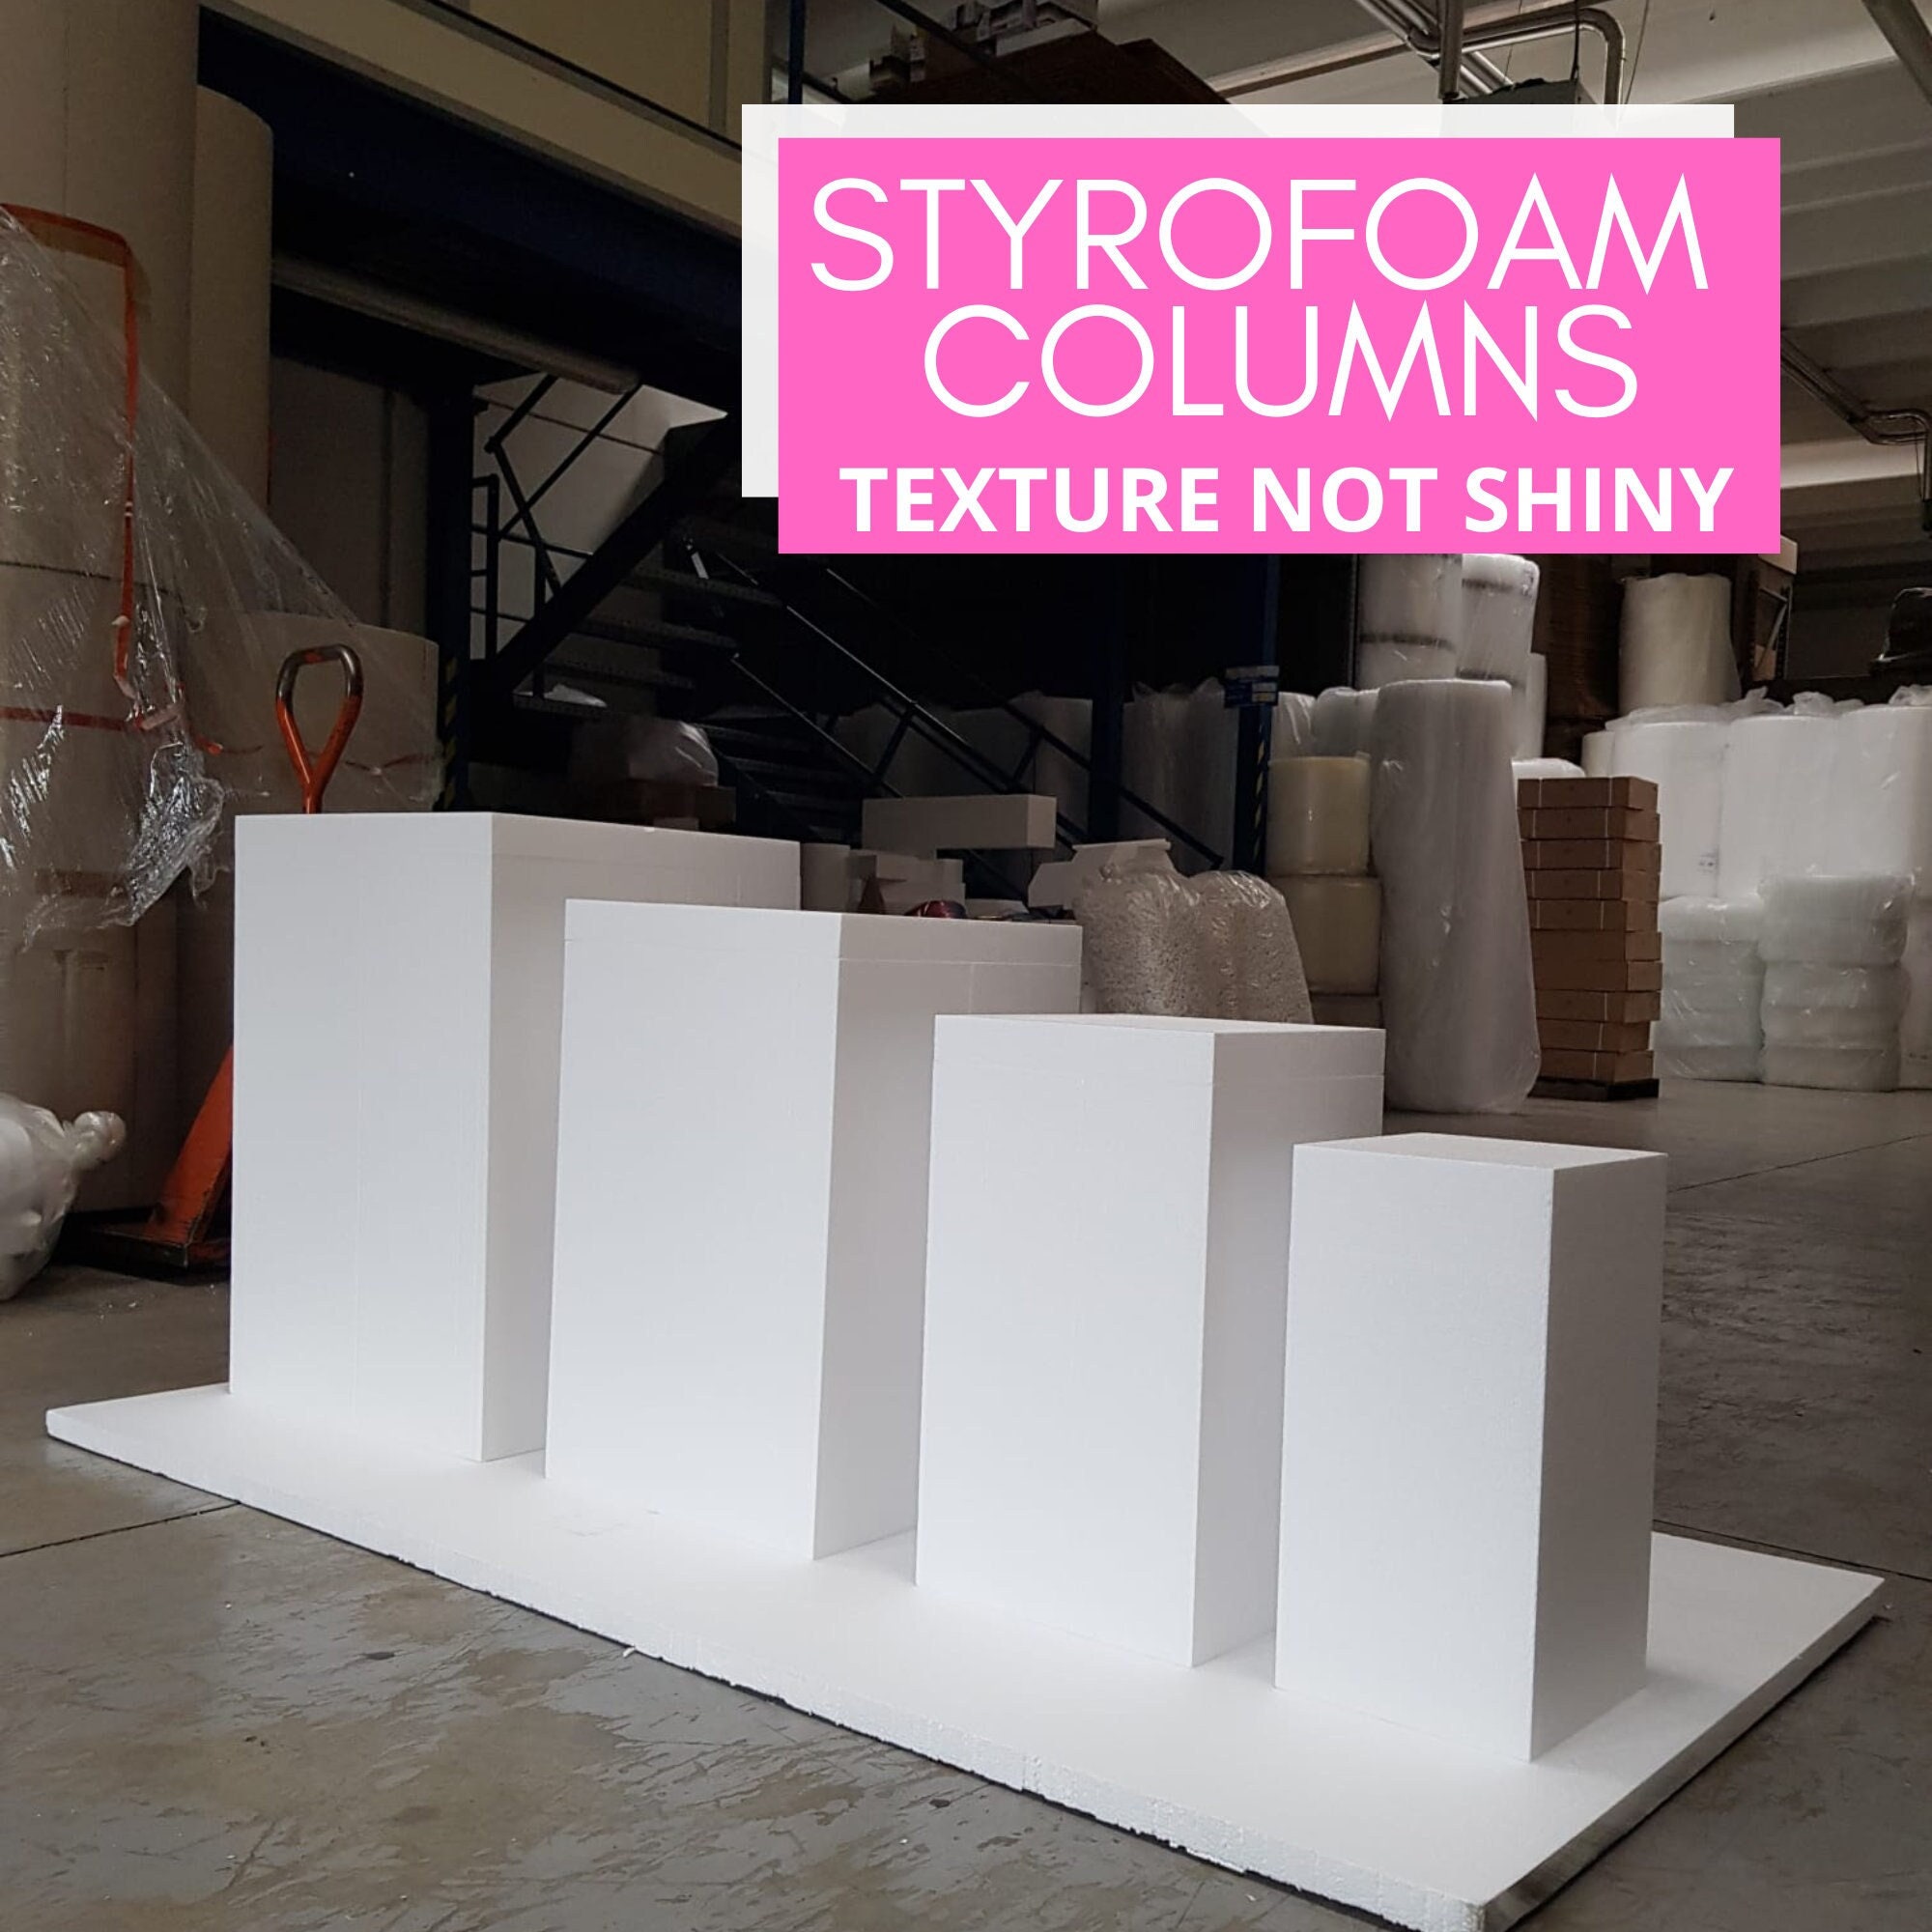 Kit 2 Styrofoam Cake Props, Foam Cylinders, Cake Base Support, Pillar for  Events, Birthday Plinth 